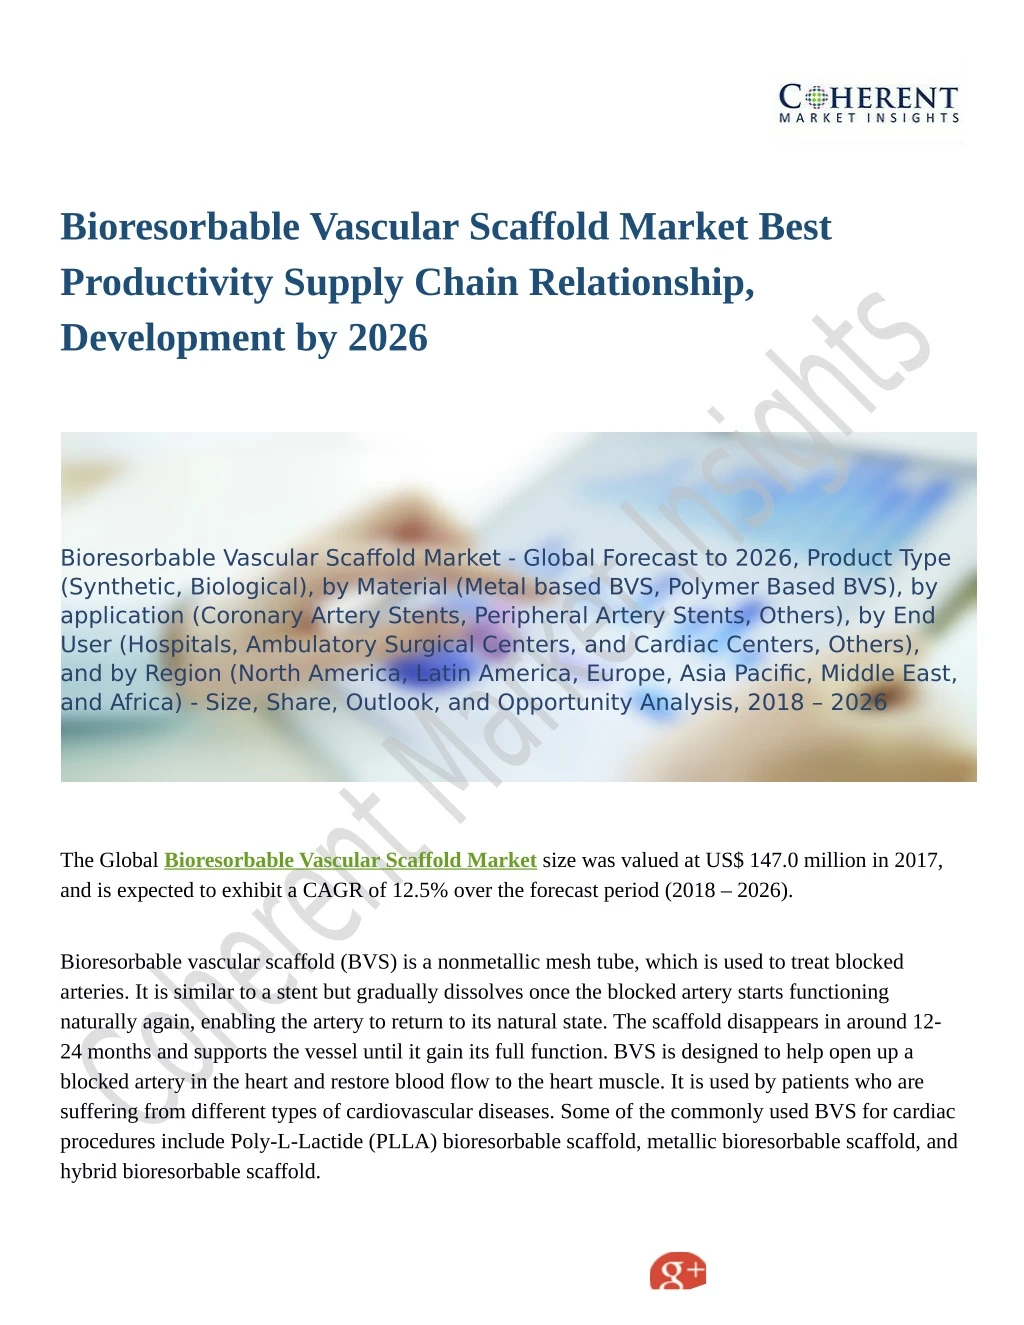 bioresorbable vascular scaffold market best